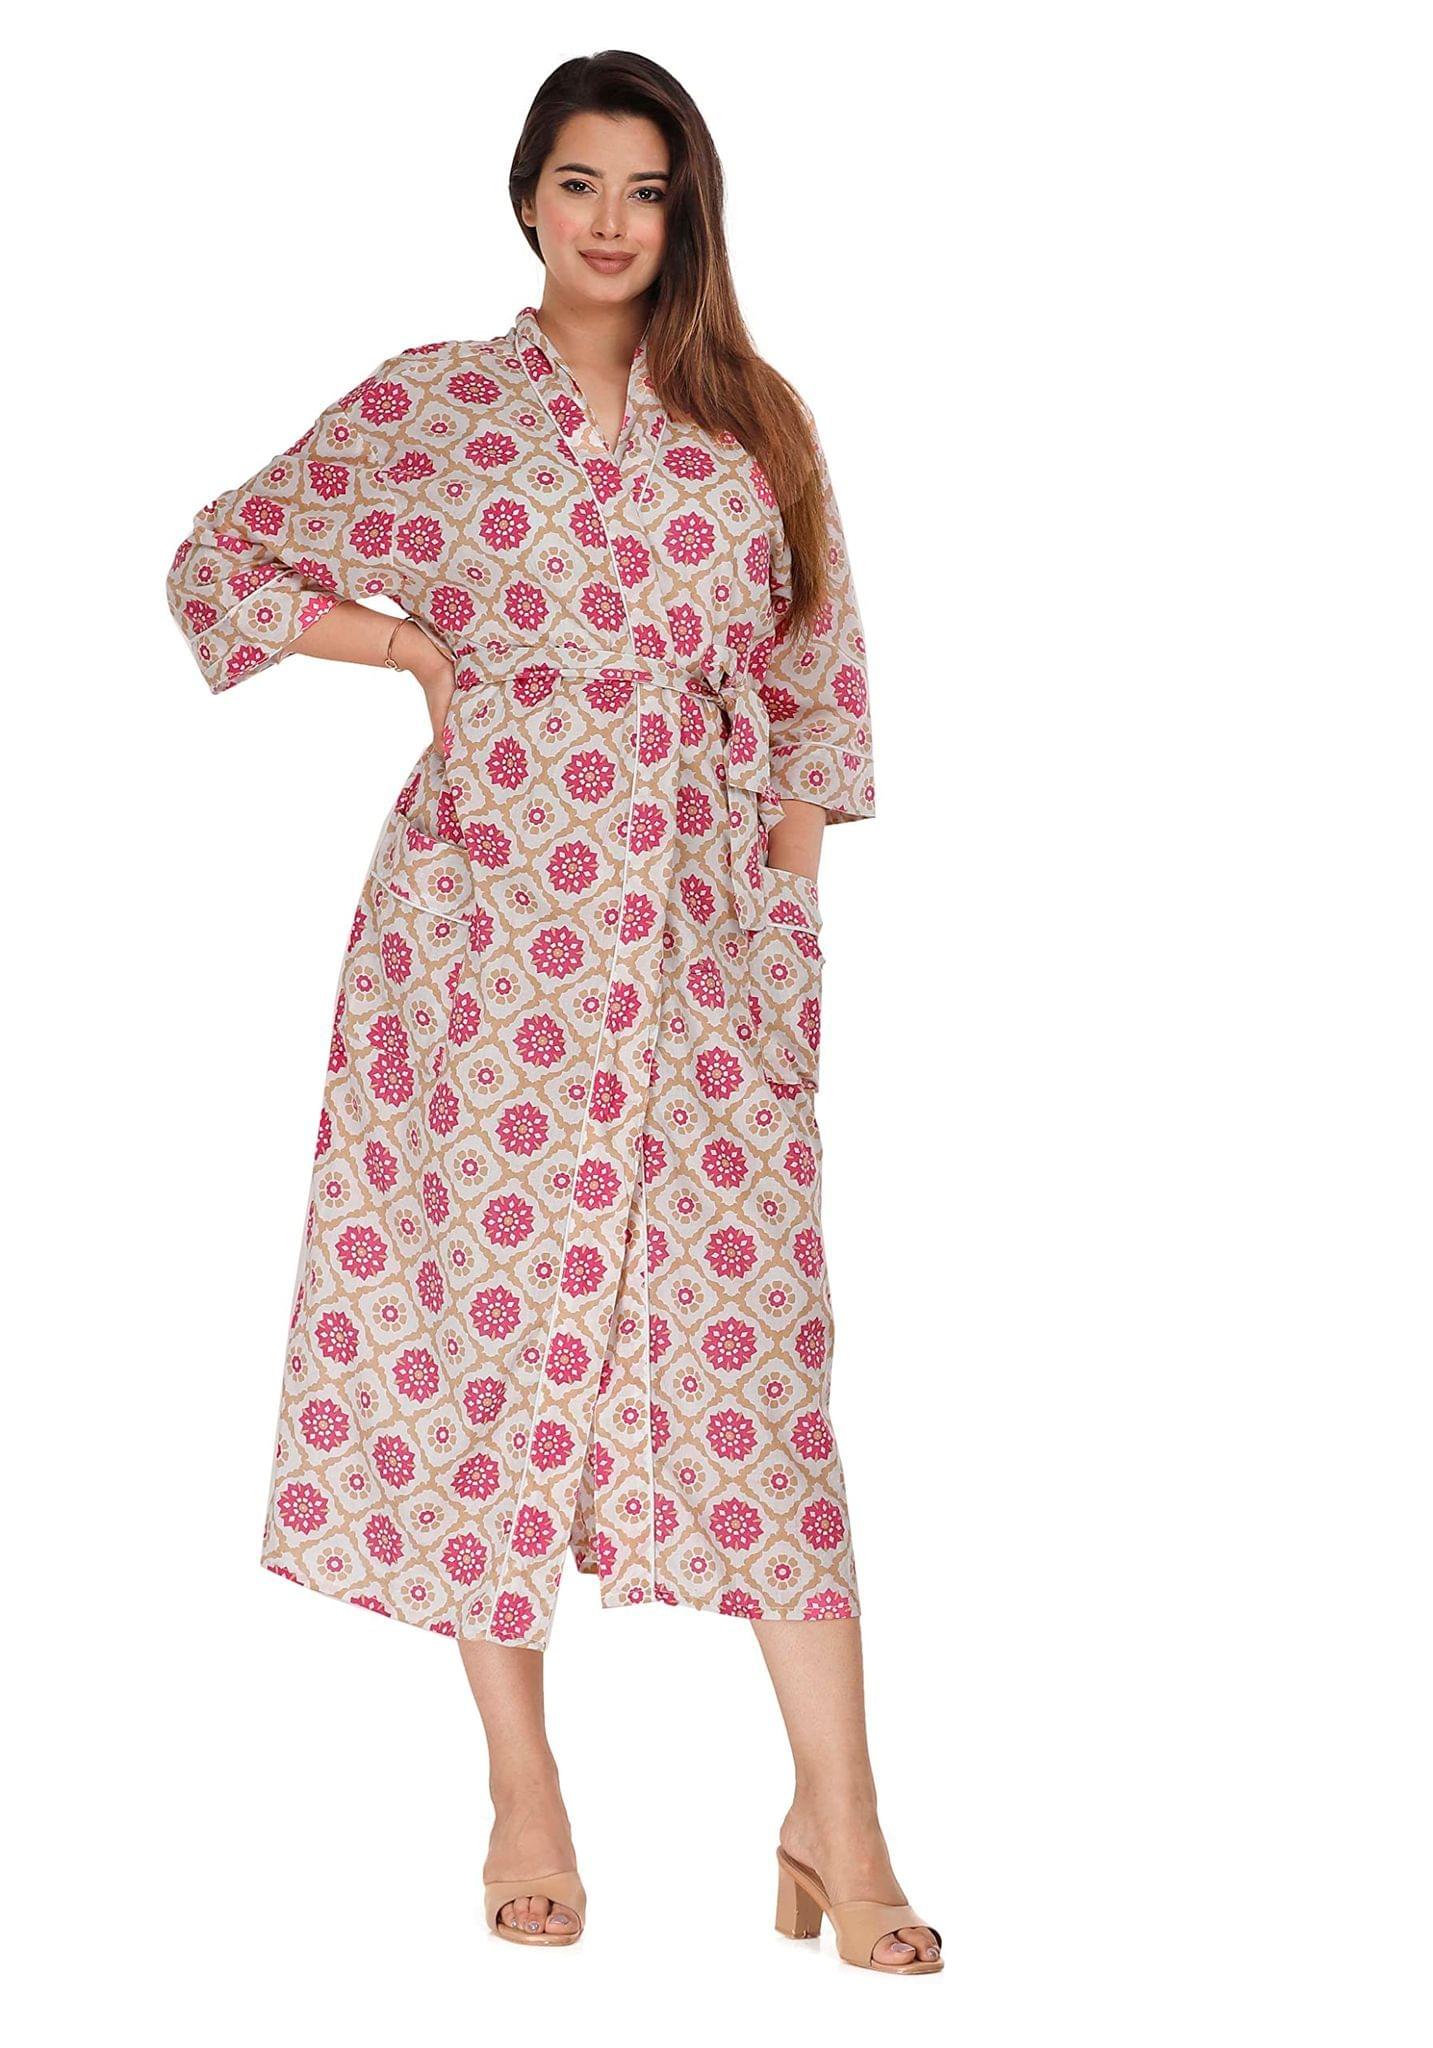 SHOOLIN Printed Kimono Robe Long Bathrobe For Women| Women Cotton Kimono Robe Long - Floral| 3/4 Sleeve Kimono For Women